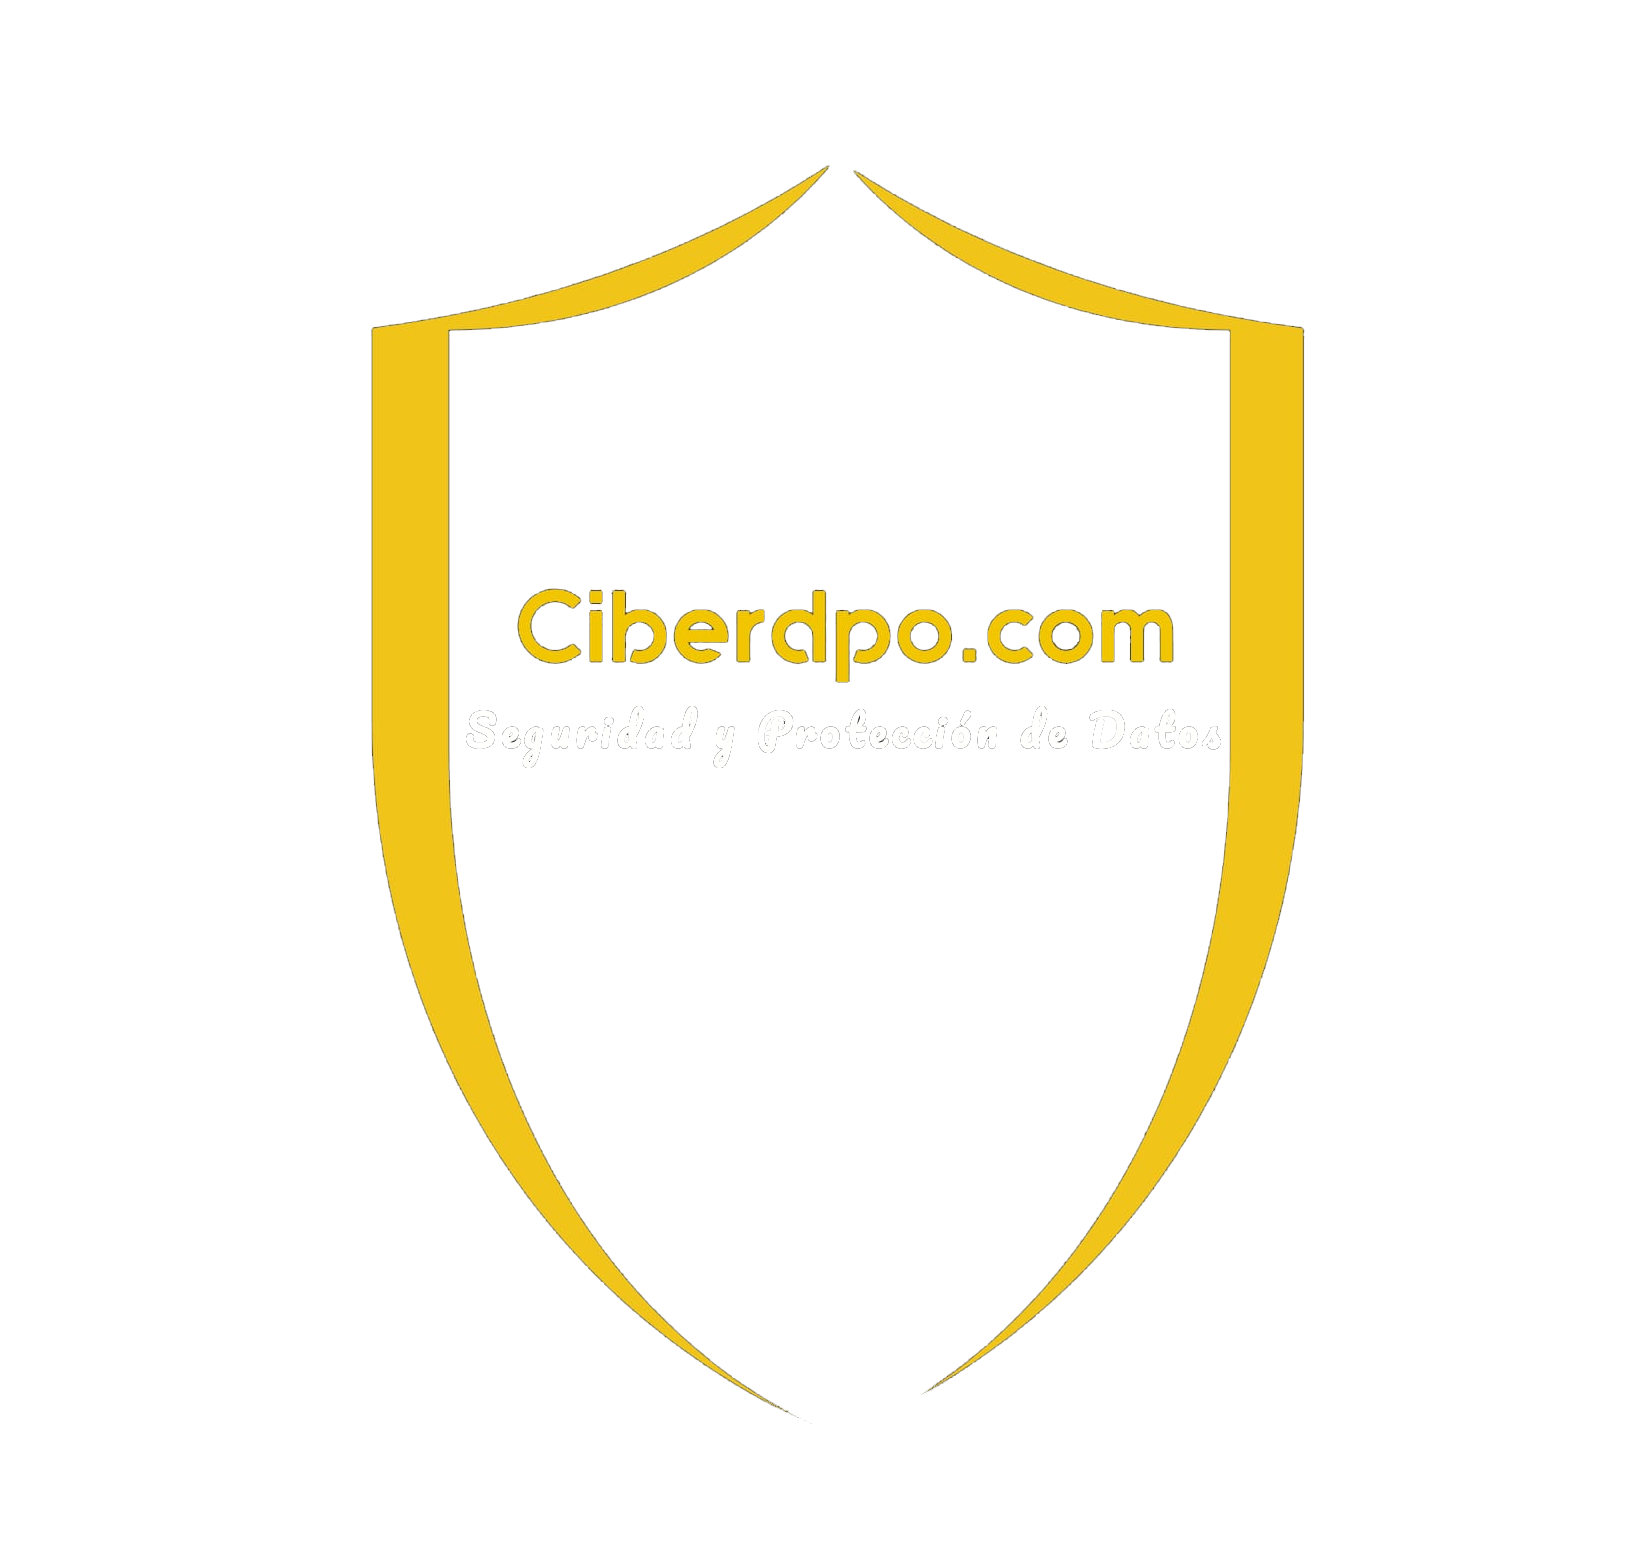 Ciberdpo.com